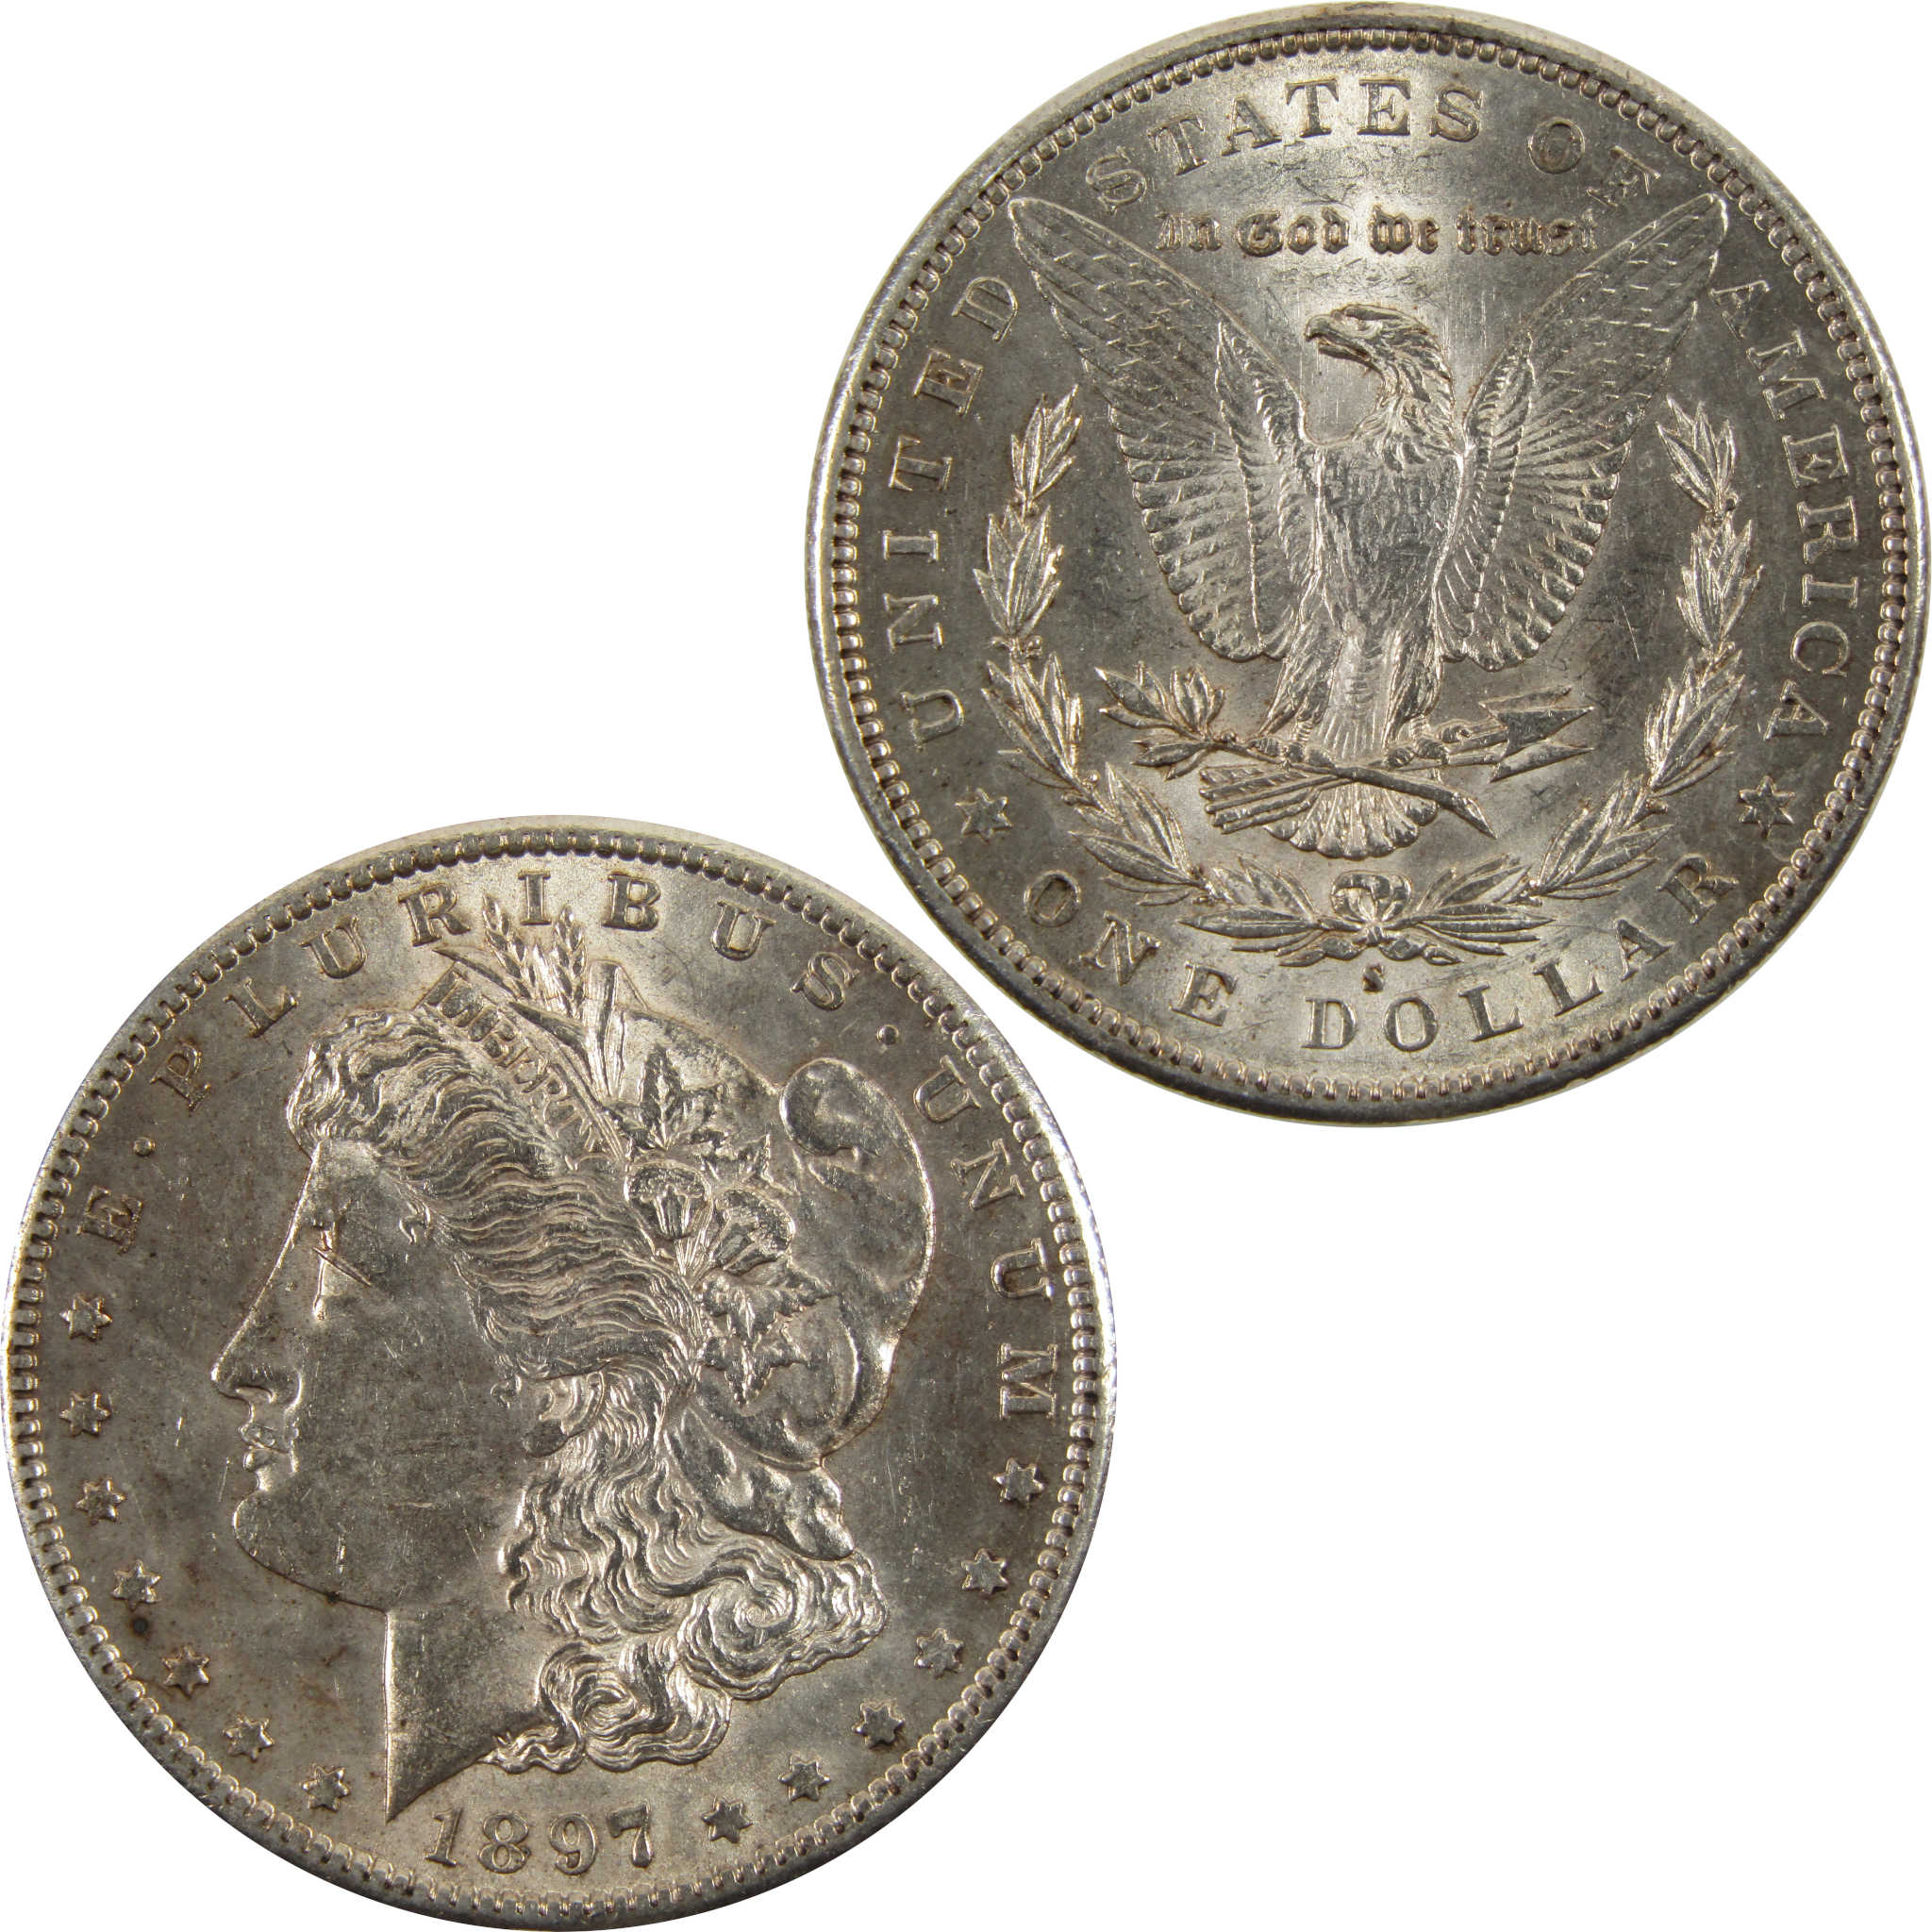 1897 S Morgan Dollar Borderline Uncirculated 90% Silver $1 SKU:I7642 - Morgan coin - Morgan silver dollar - Morgan silver dollar for sale - Profile Coins &amp; Collectibles